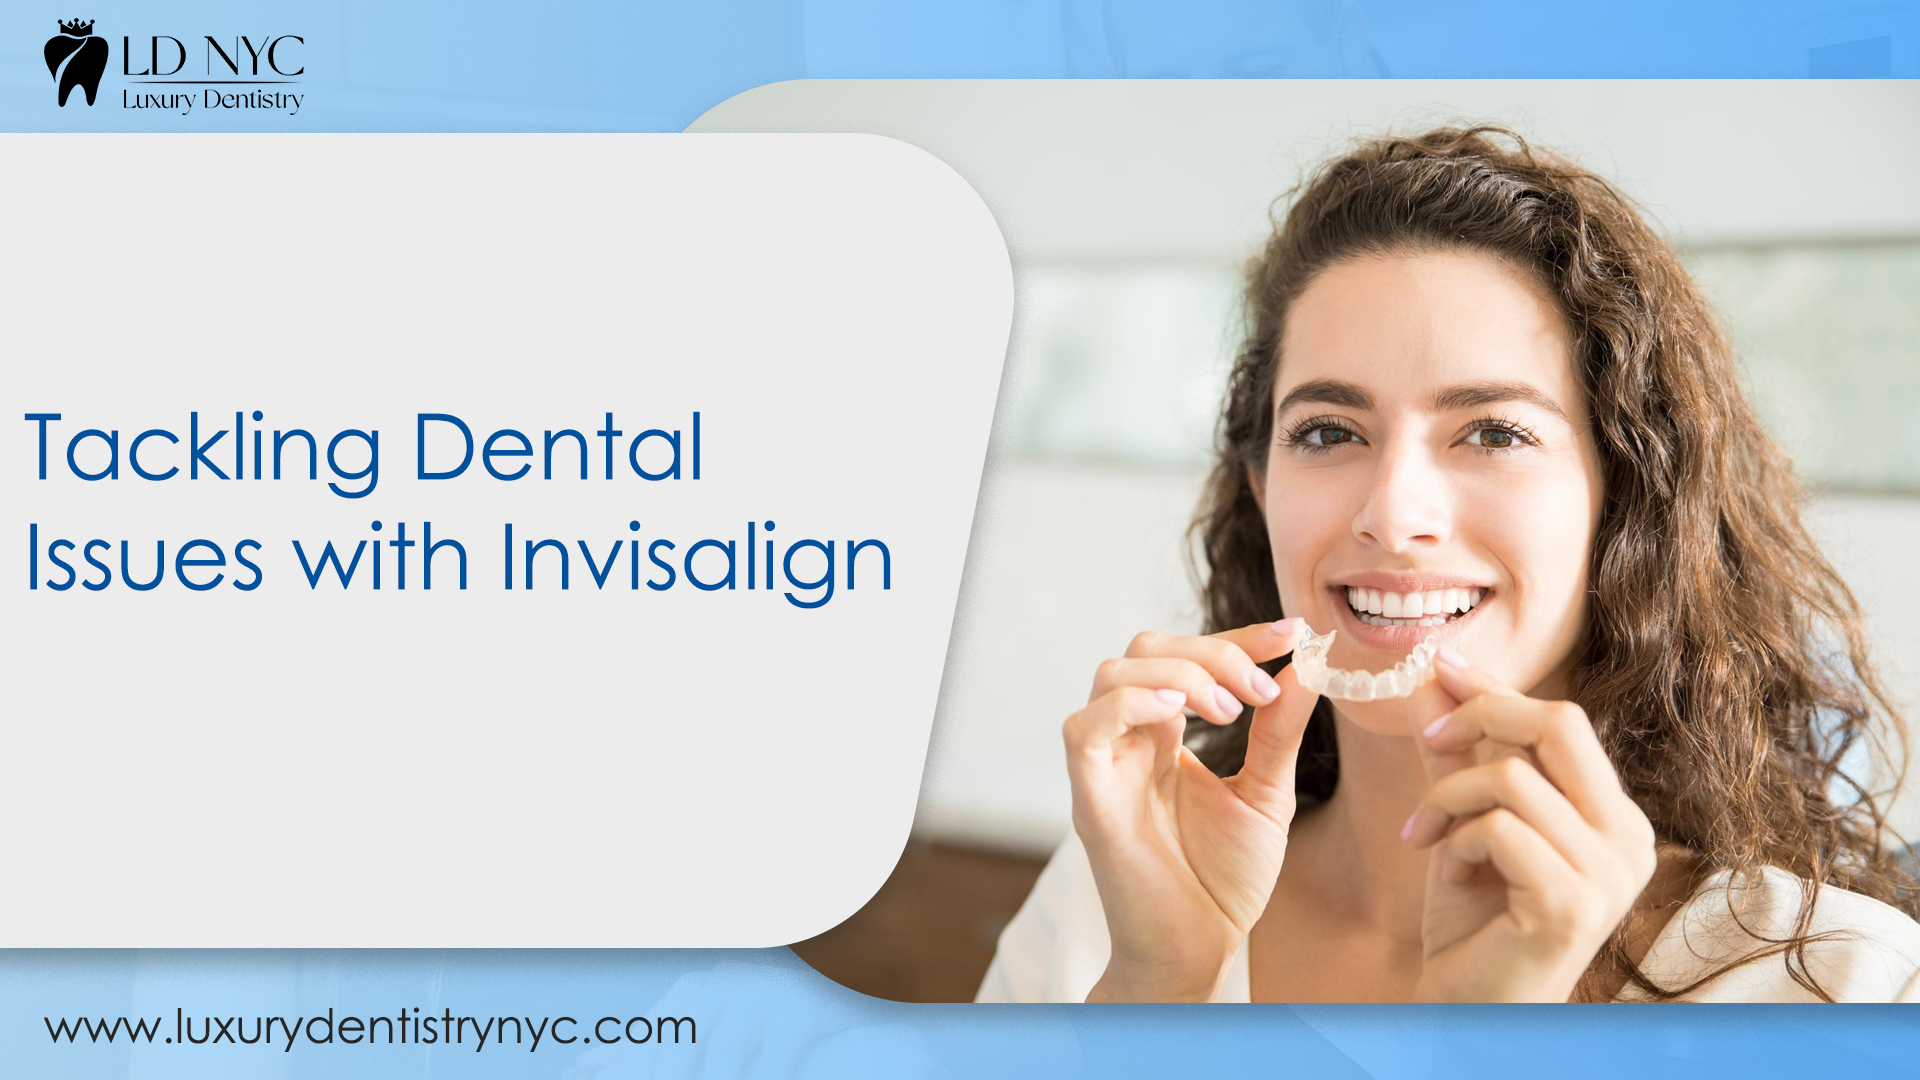 Use invisalign to treat dental concerns.